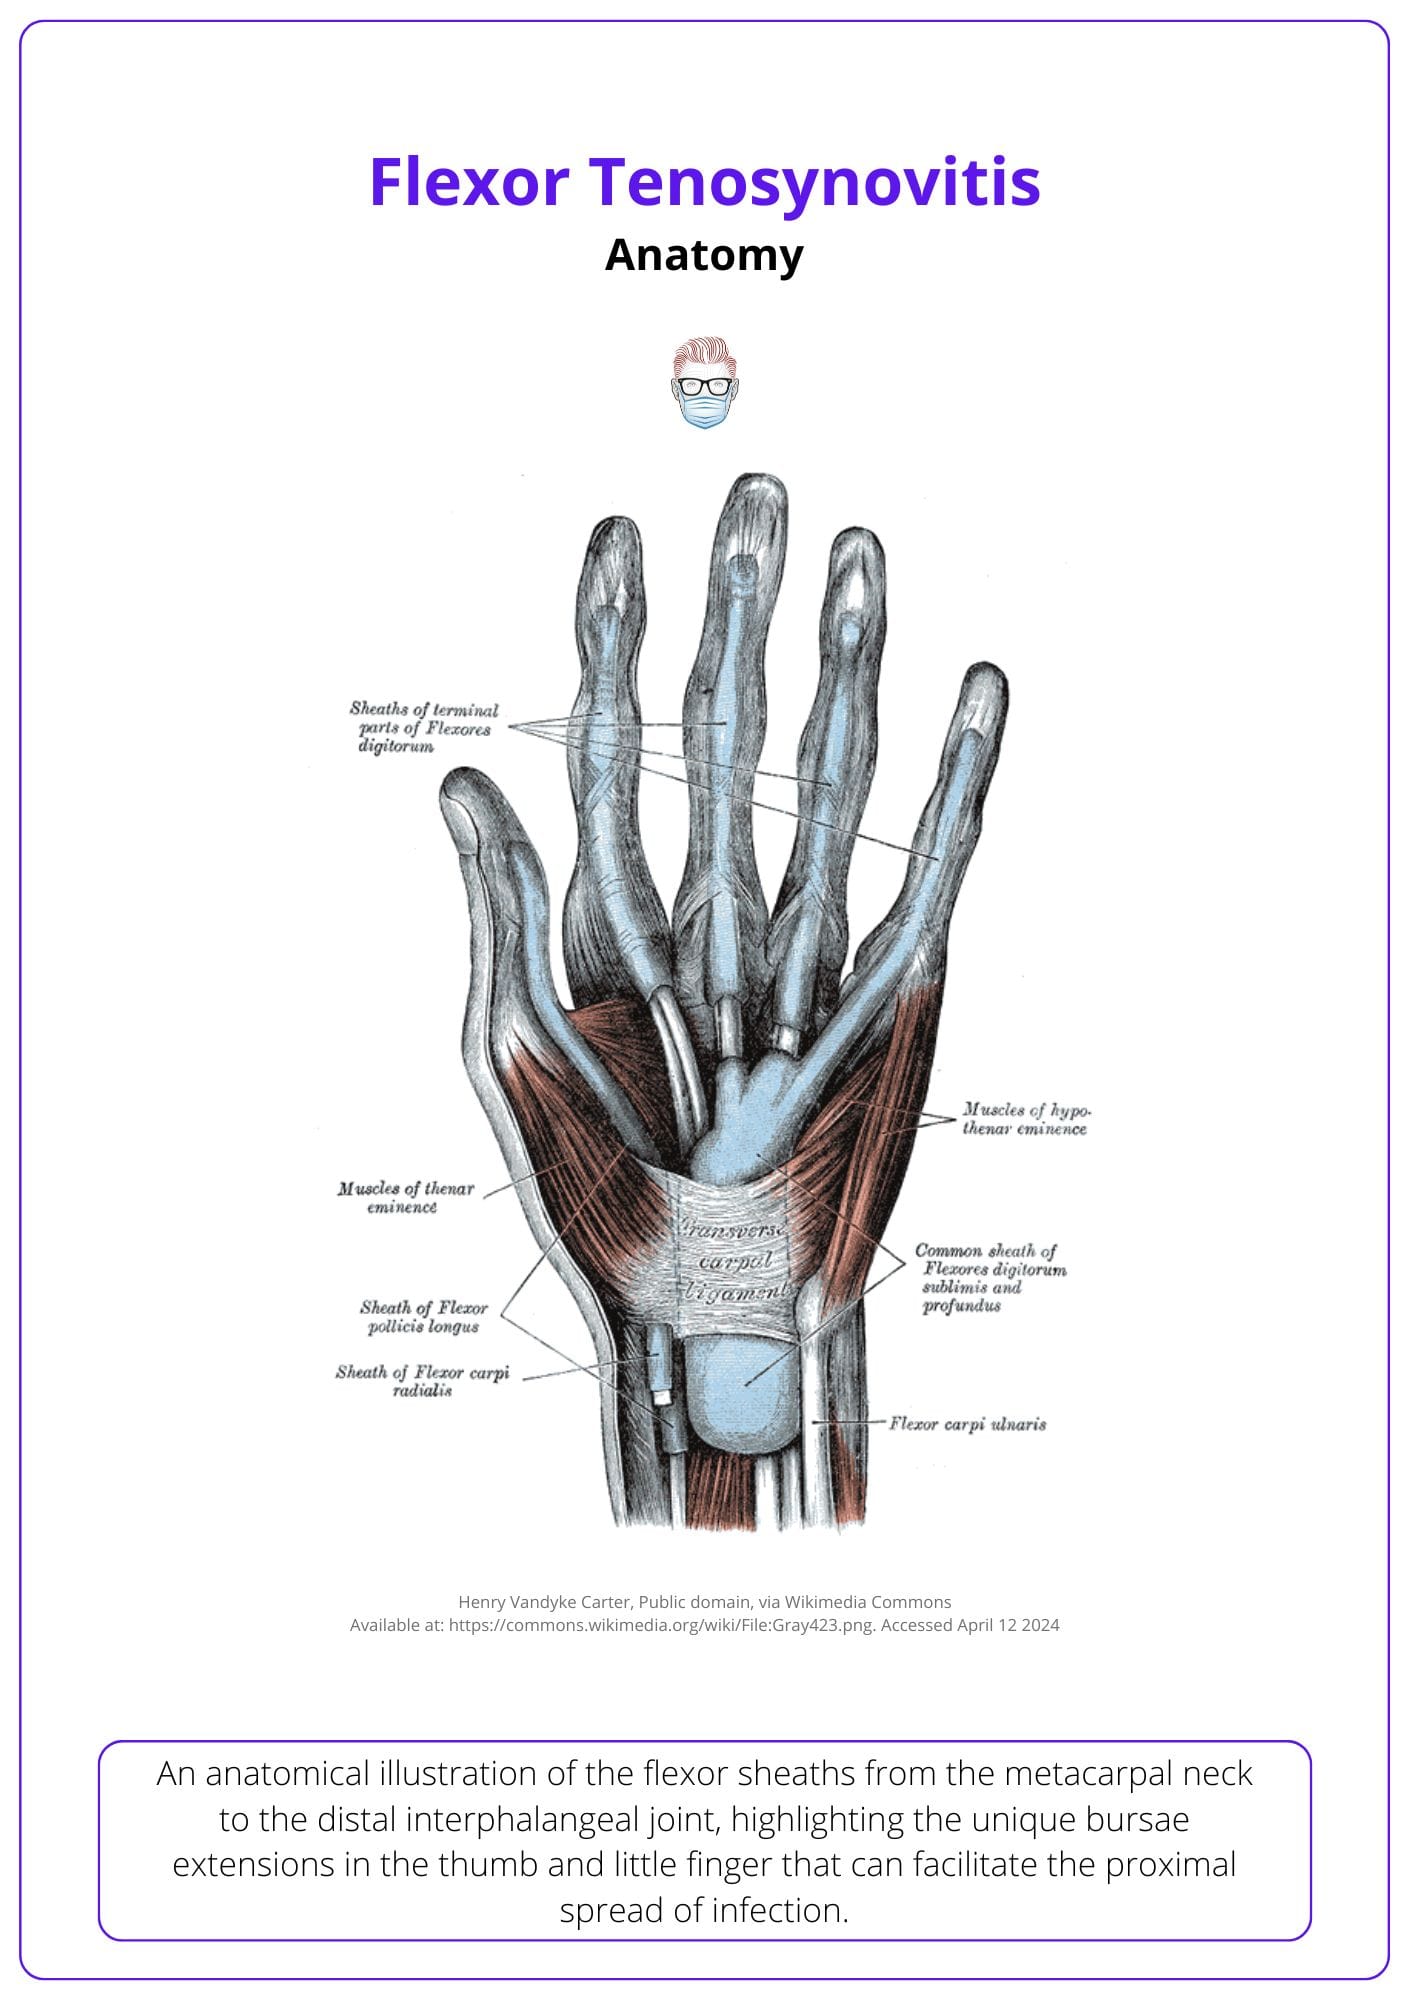 Volar hand anatomy of flexor tendons, flexor sheaths, and bursae.